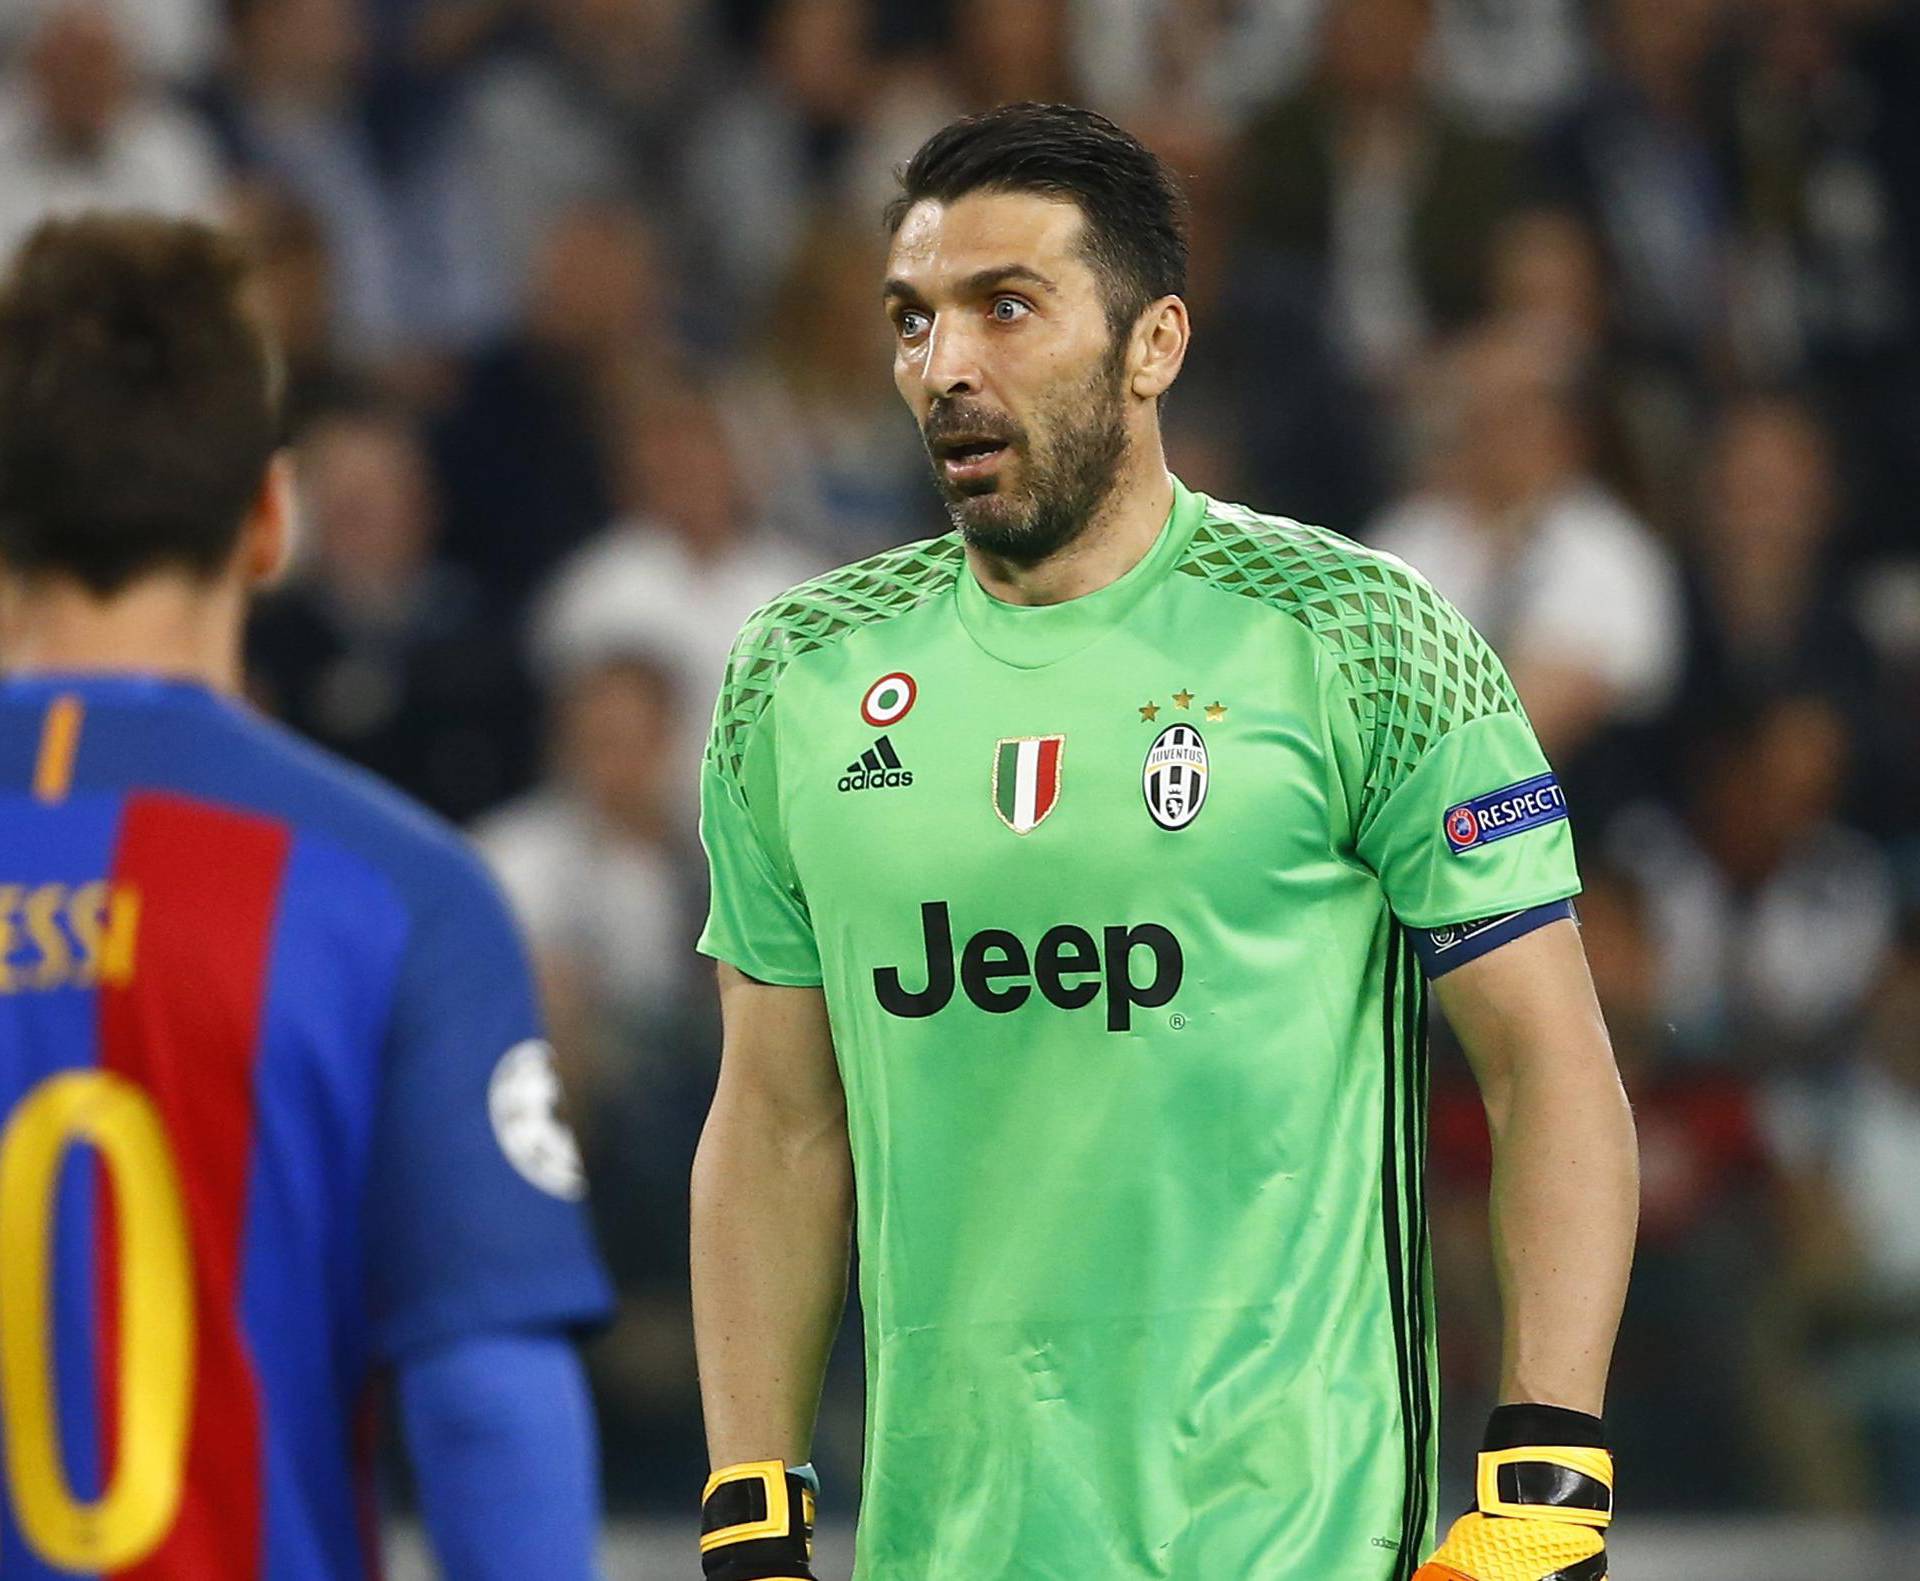 Juventus' Gianluigi Buffon looks on after Barcelona's Lionel Messi has a goal disallowed